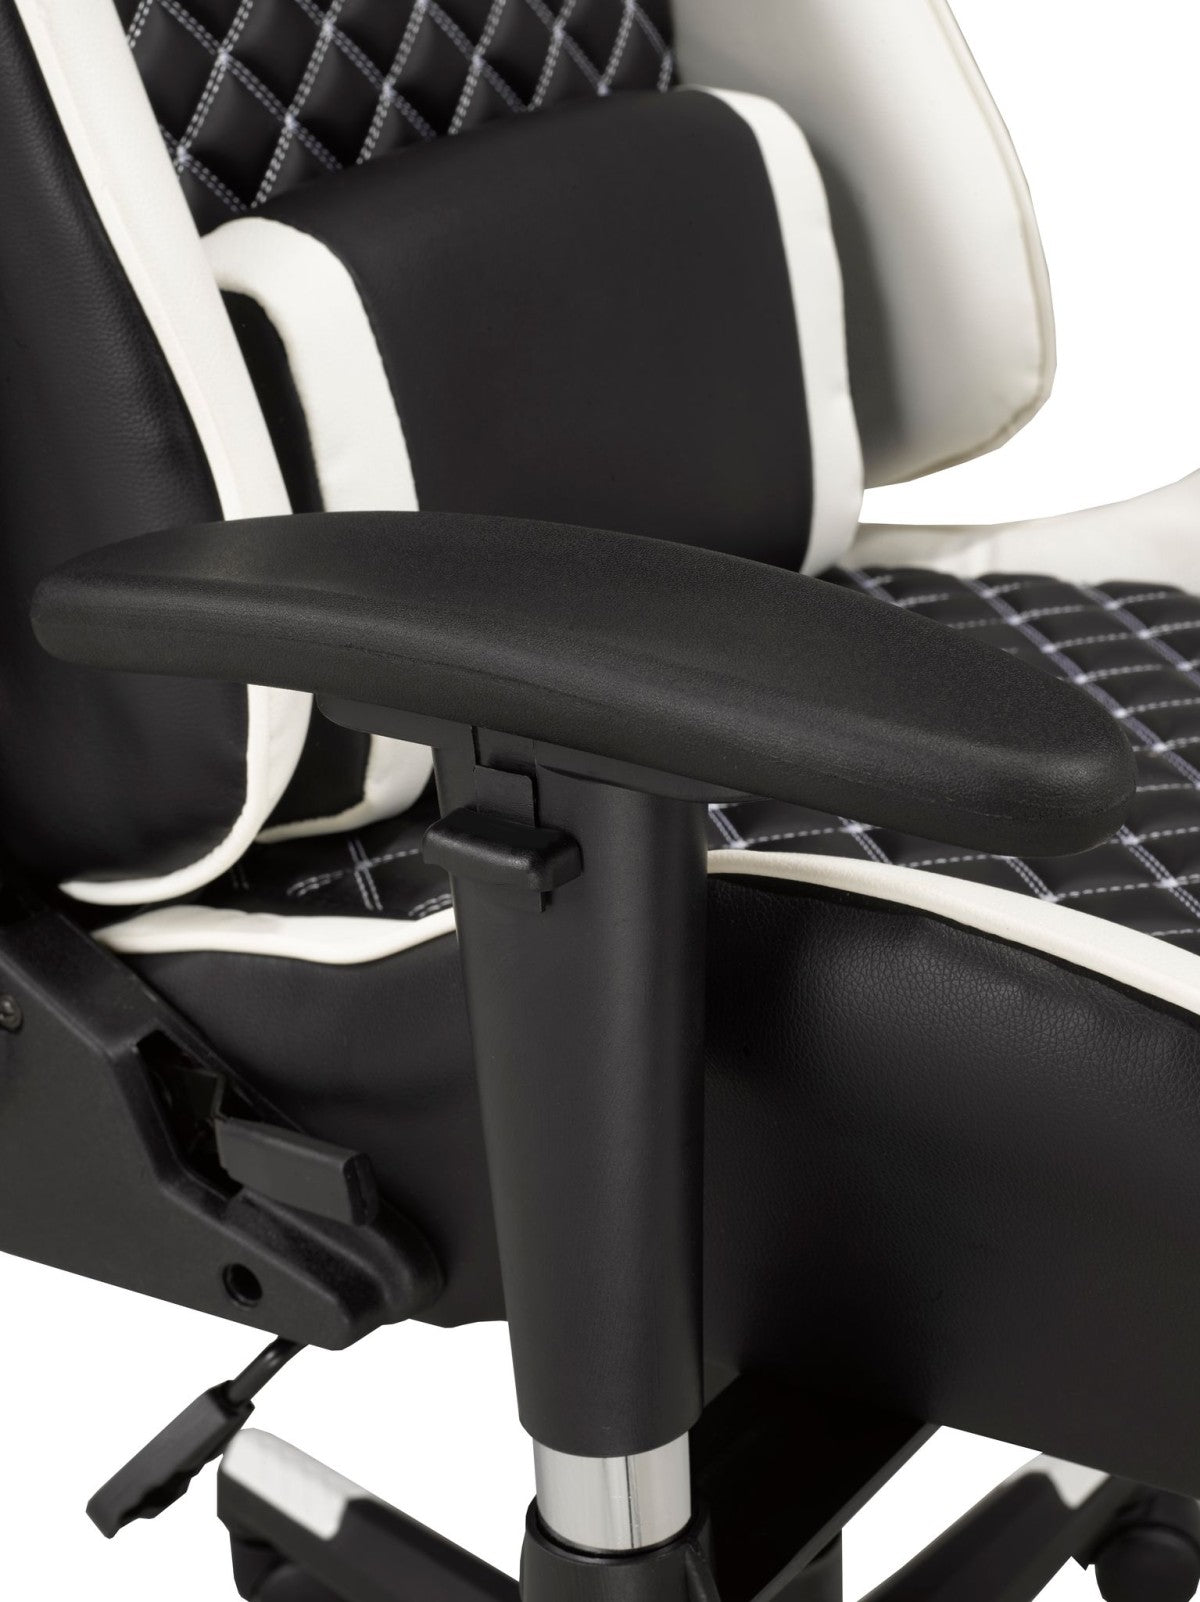 Office Chair Black/White 3802